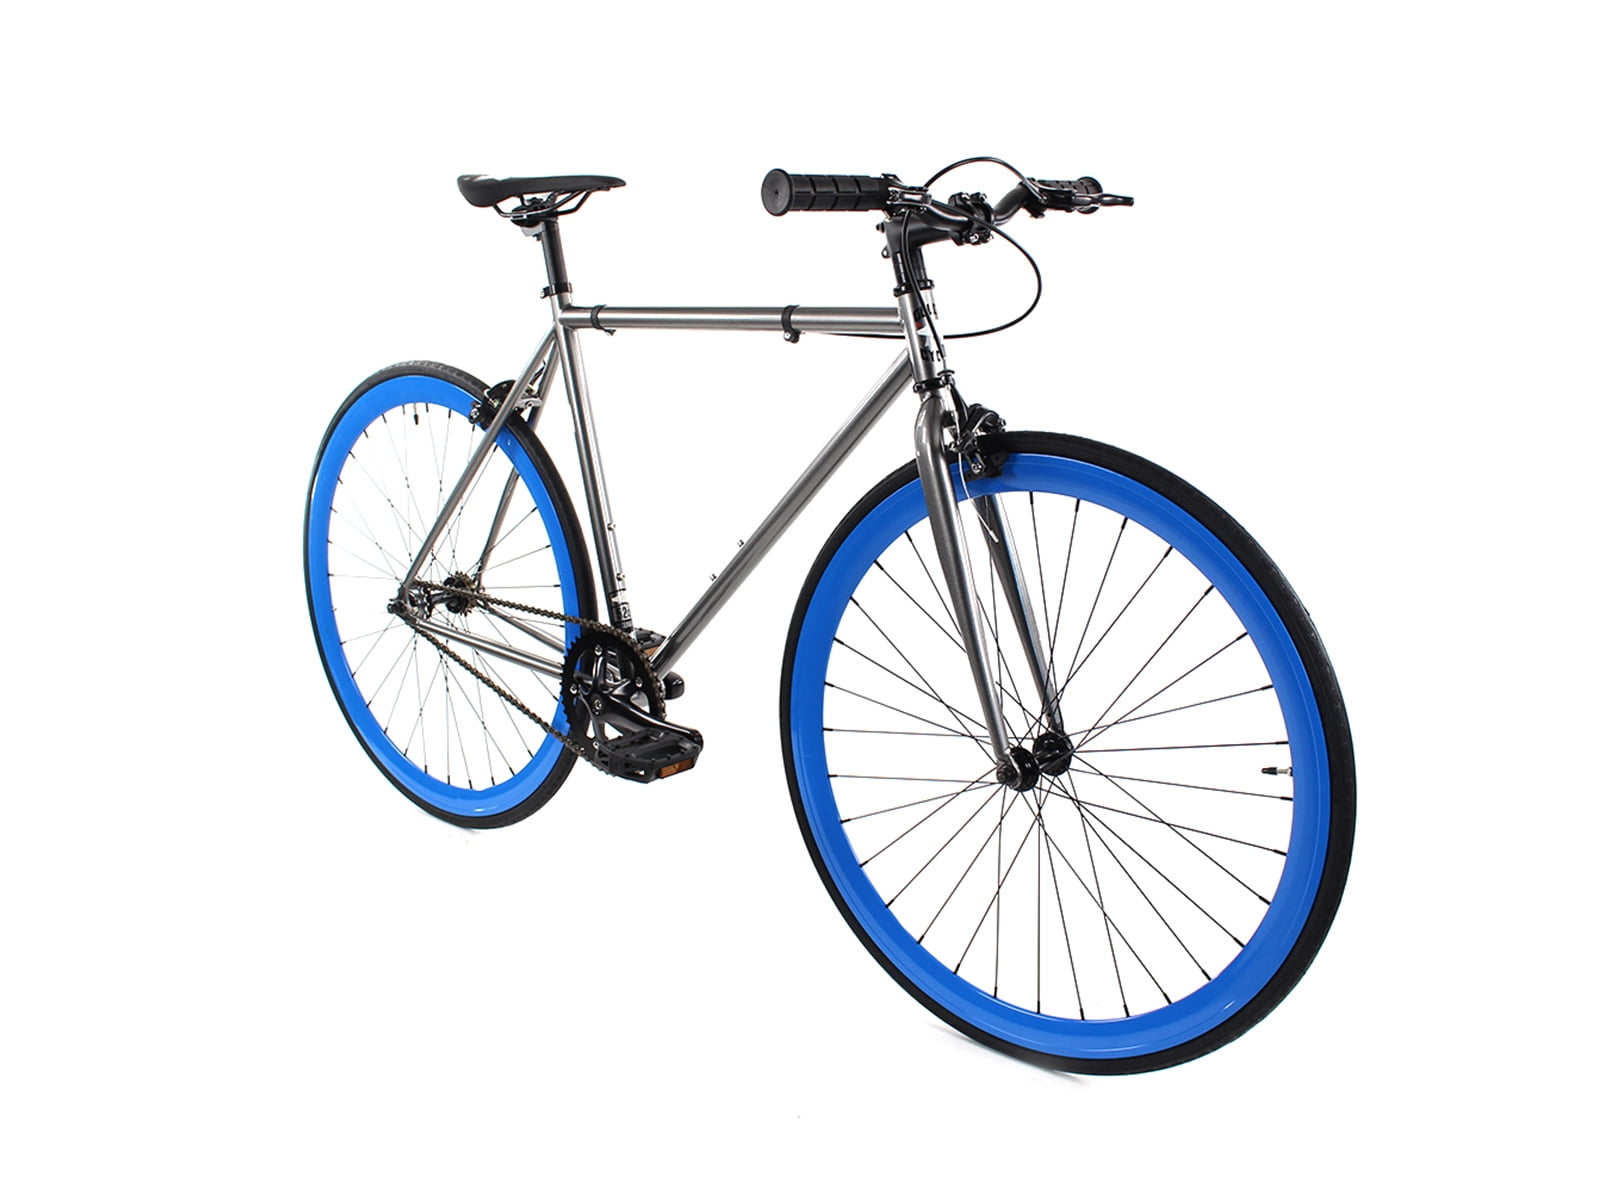 golden cycles shocker fixie bike